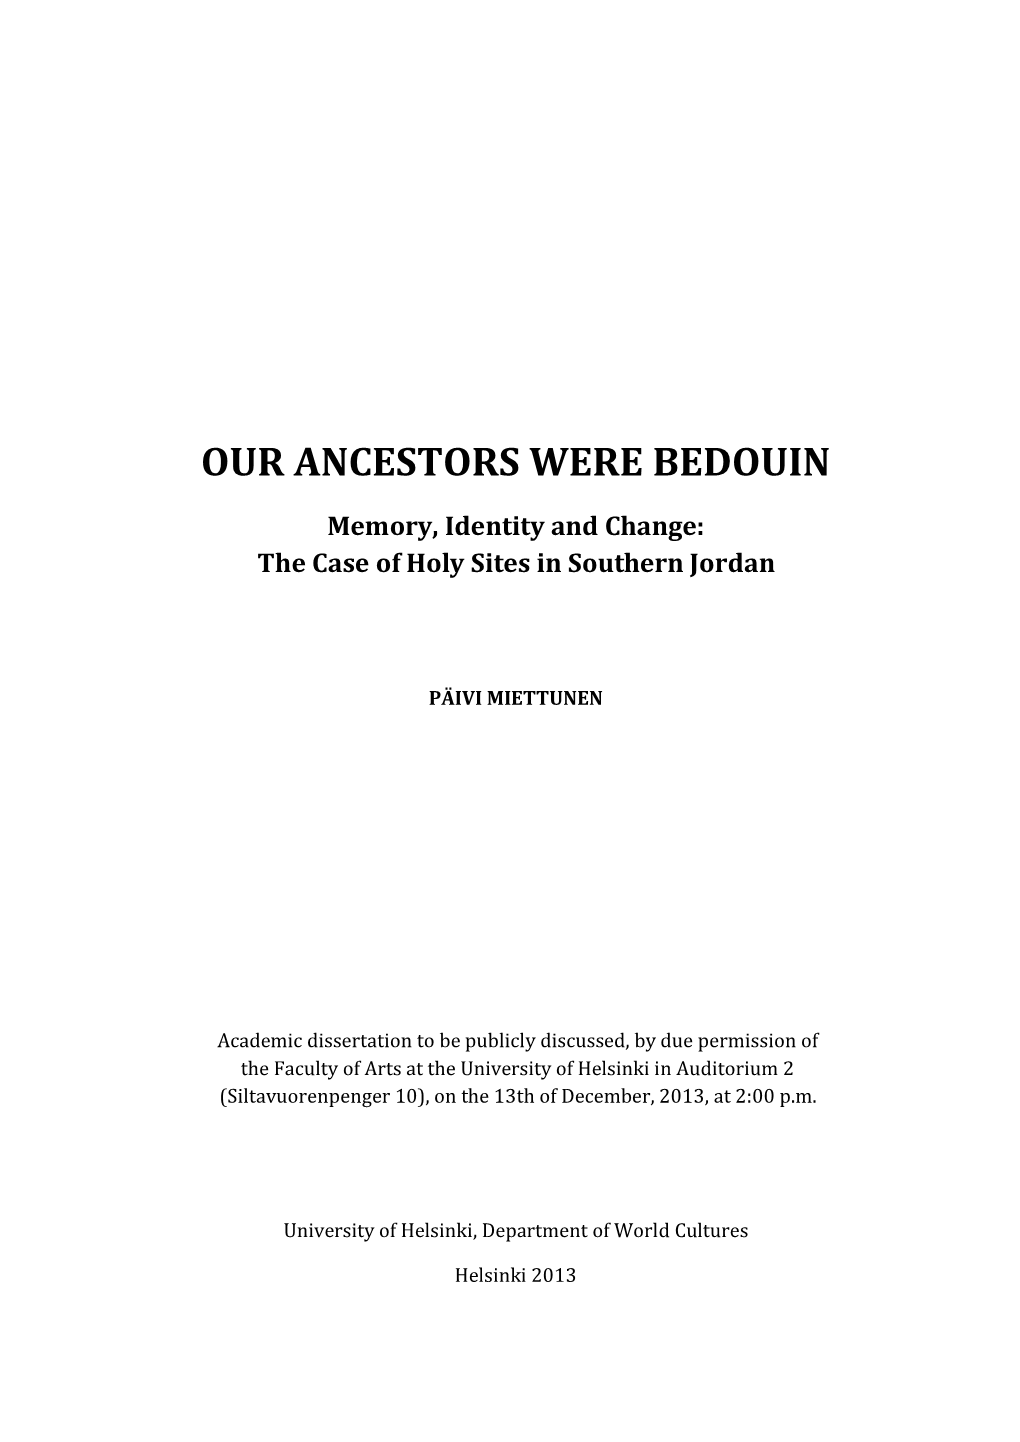 Our Ancestors Were Bedouin”